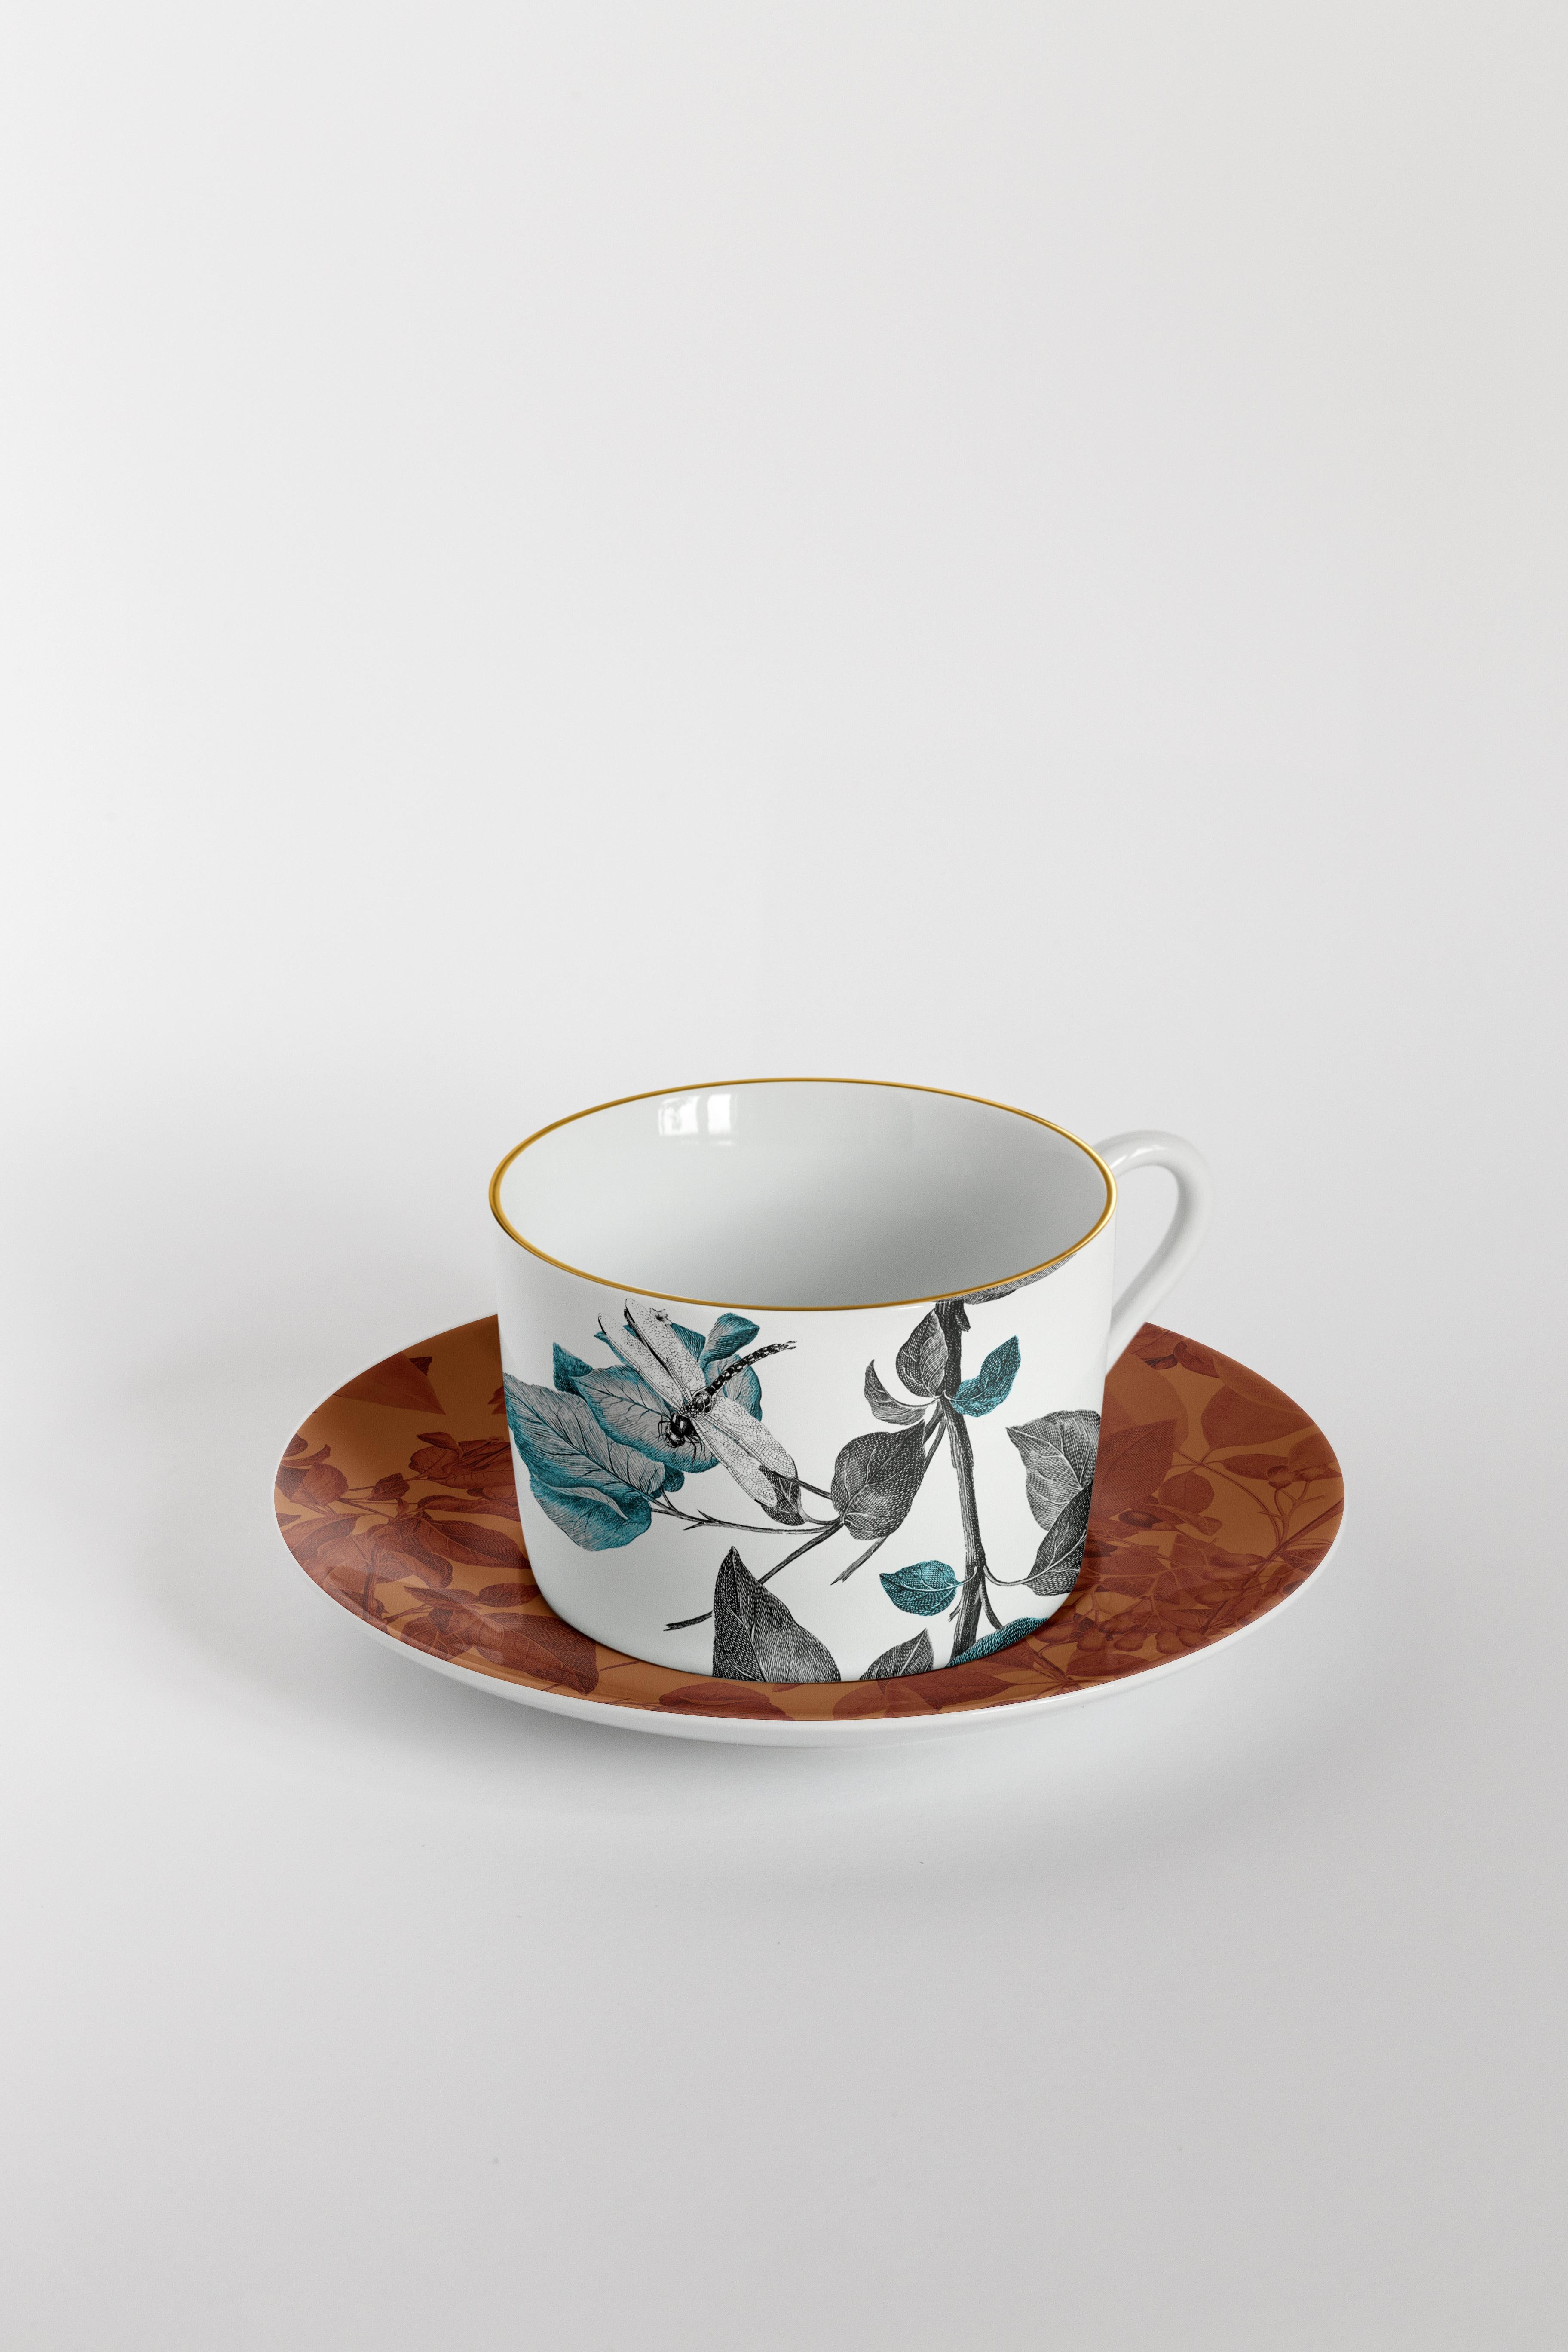 Black Dragon, Tea Set with Six Contemporary Porcelains with Decorative Design For Sale 2